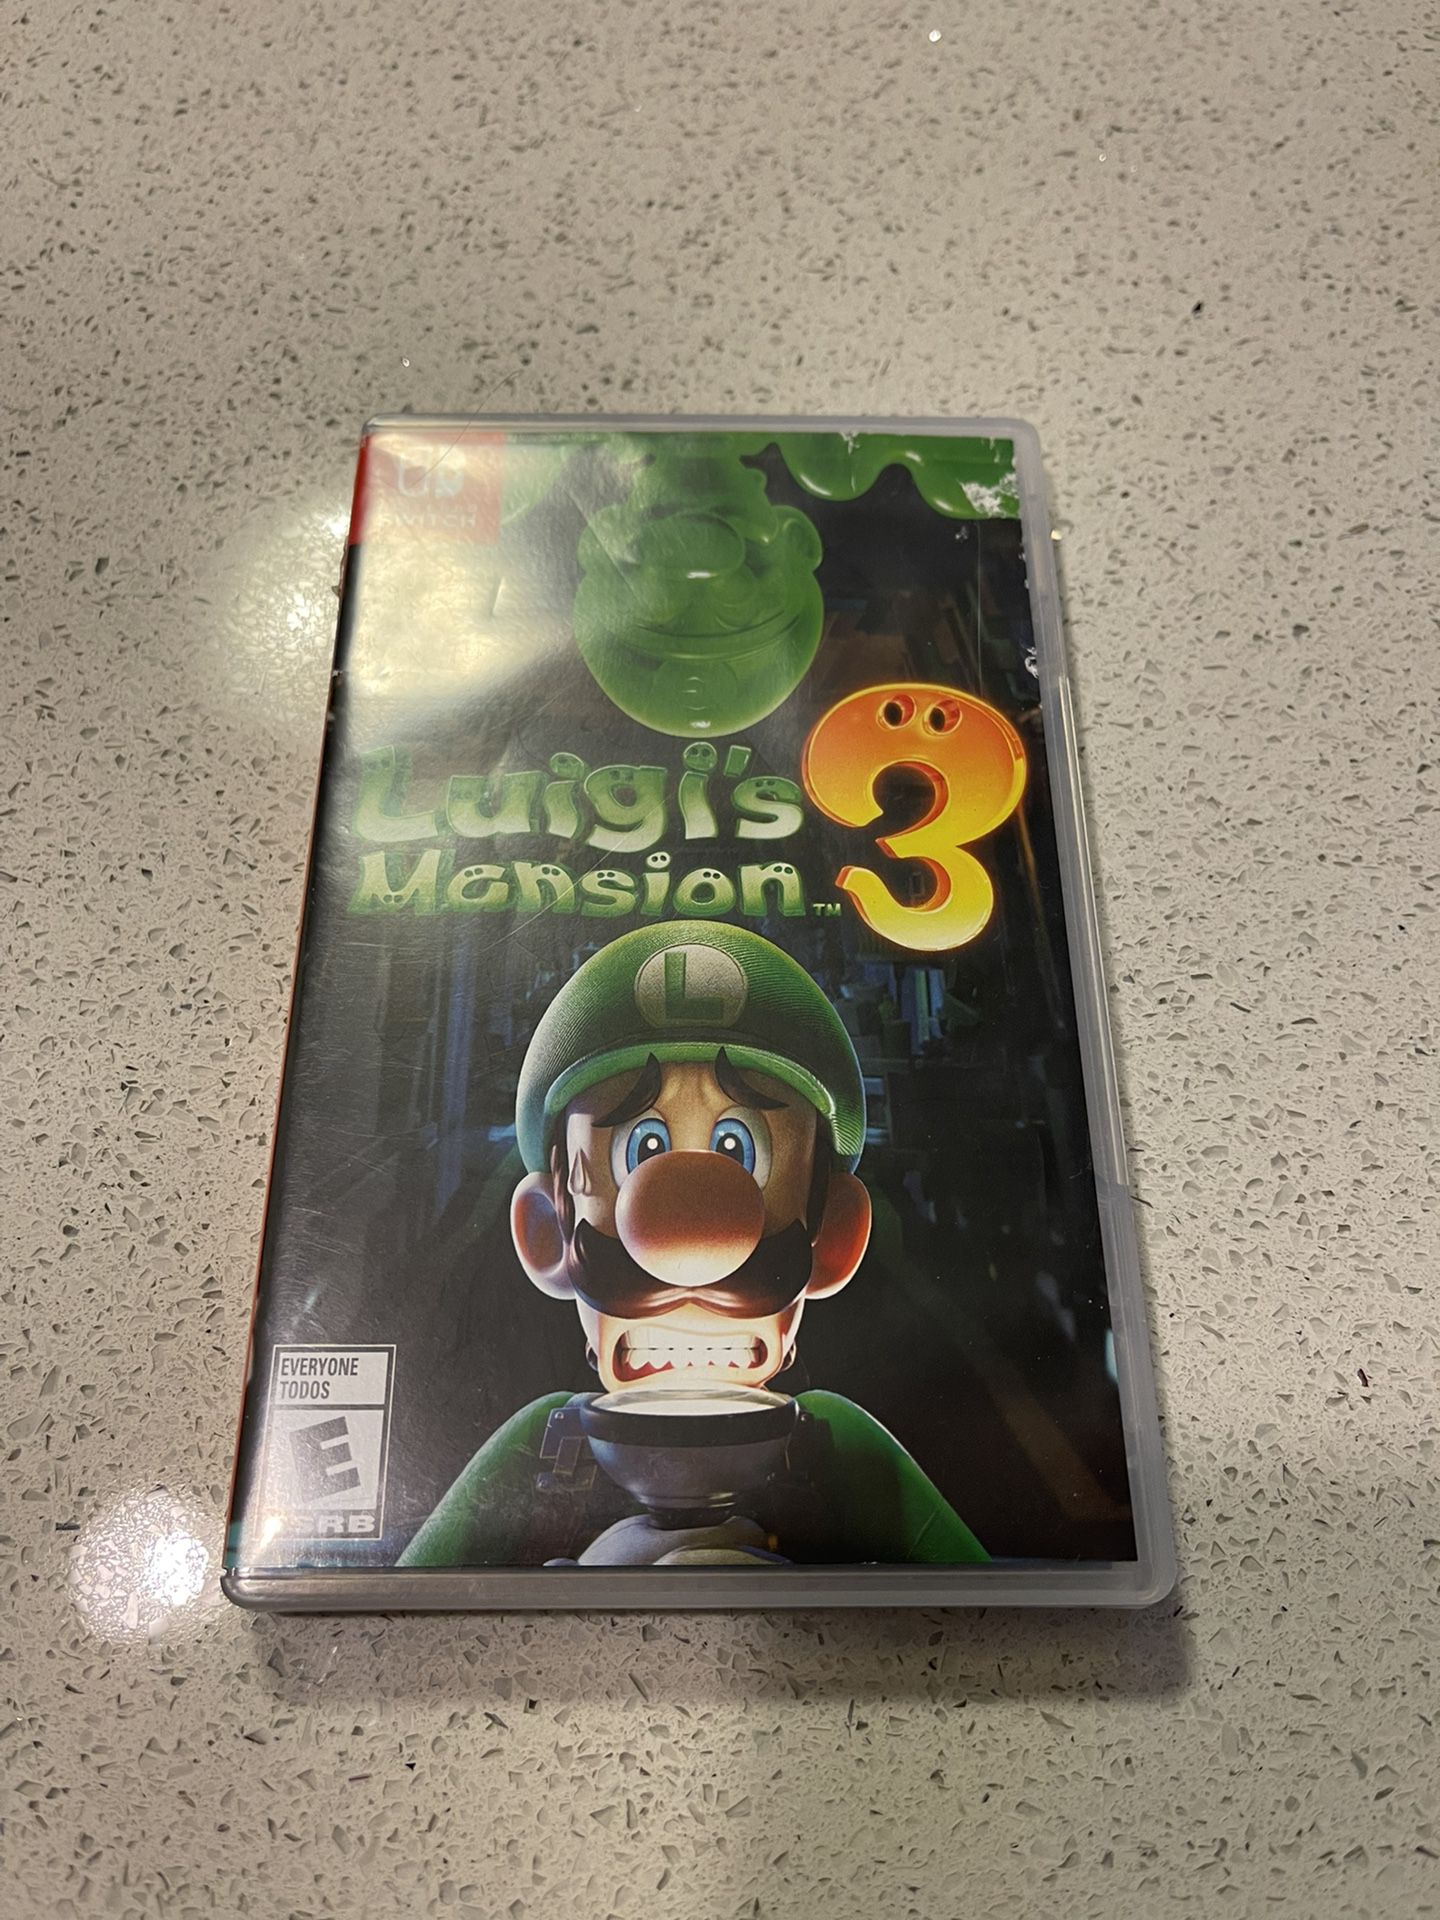 Luigis Mansion 3 Switch Game